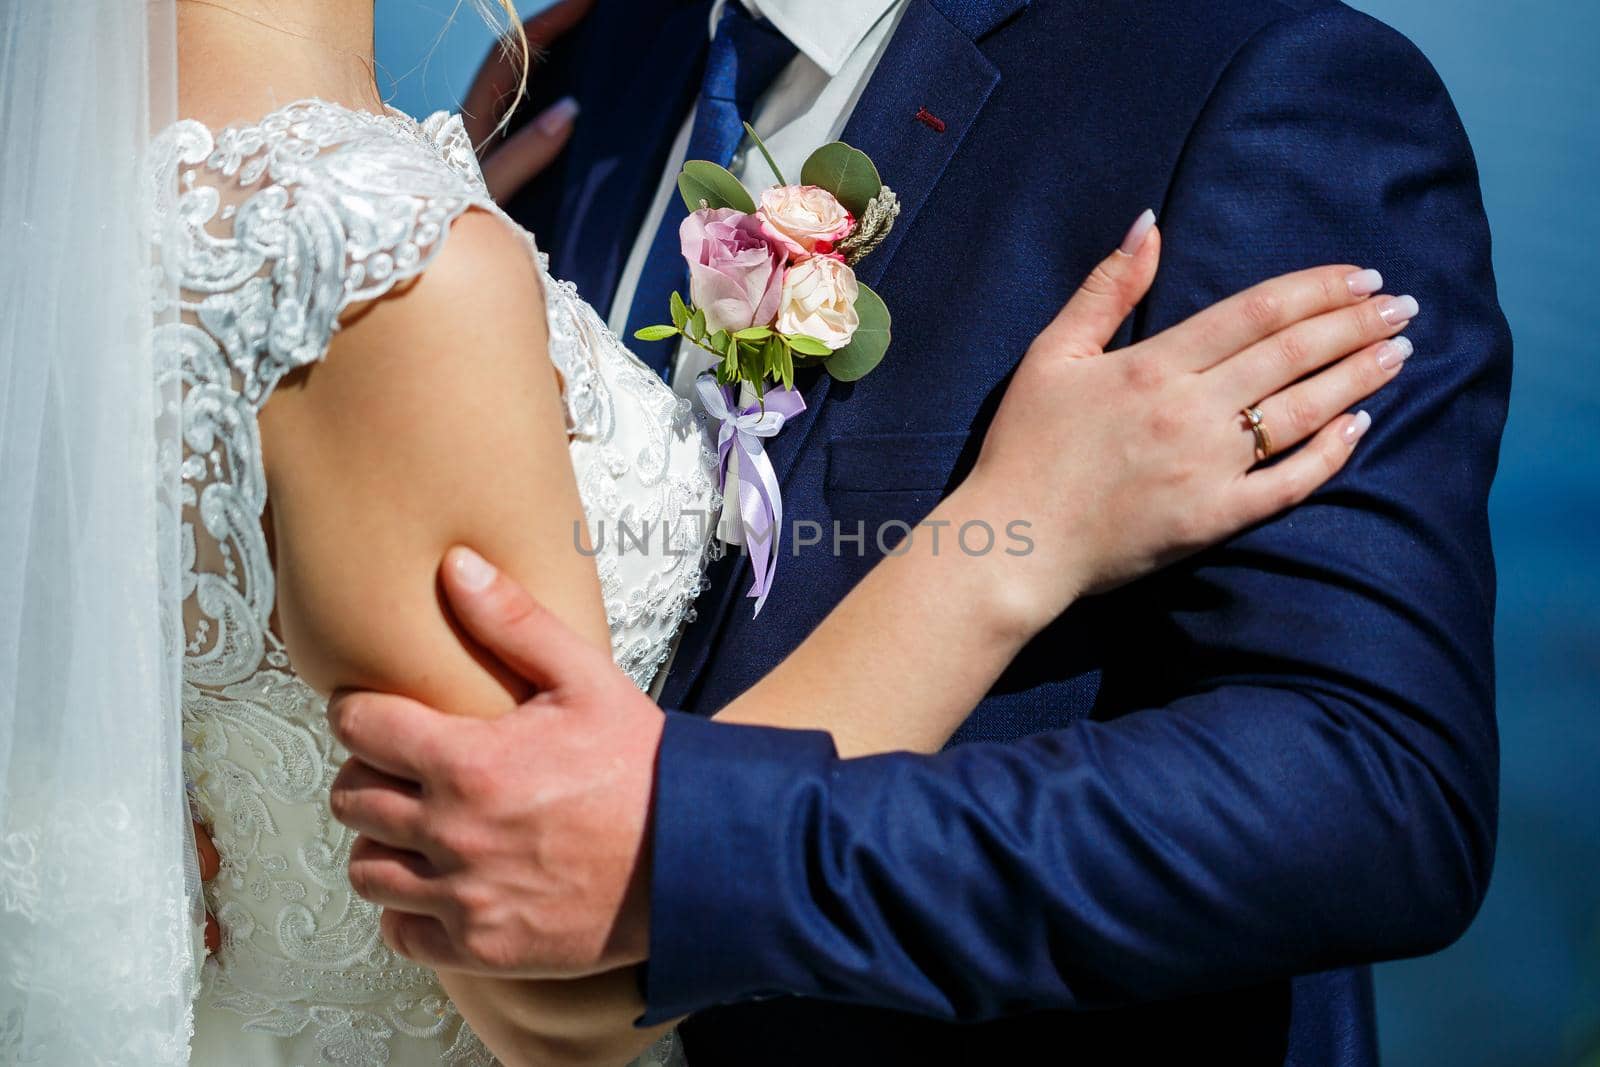 Bride and groom hugging on a wedding day by Dmitrytph